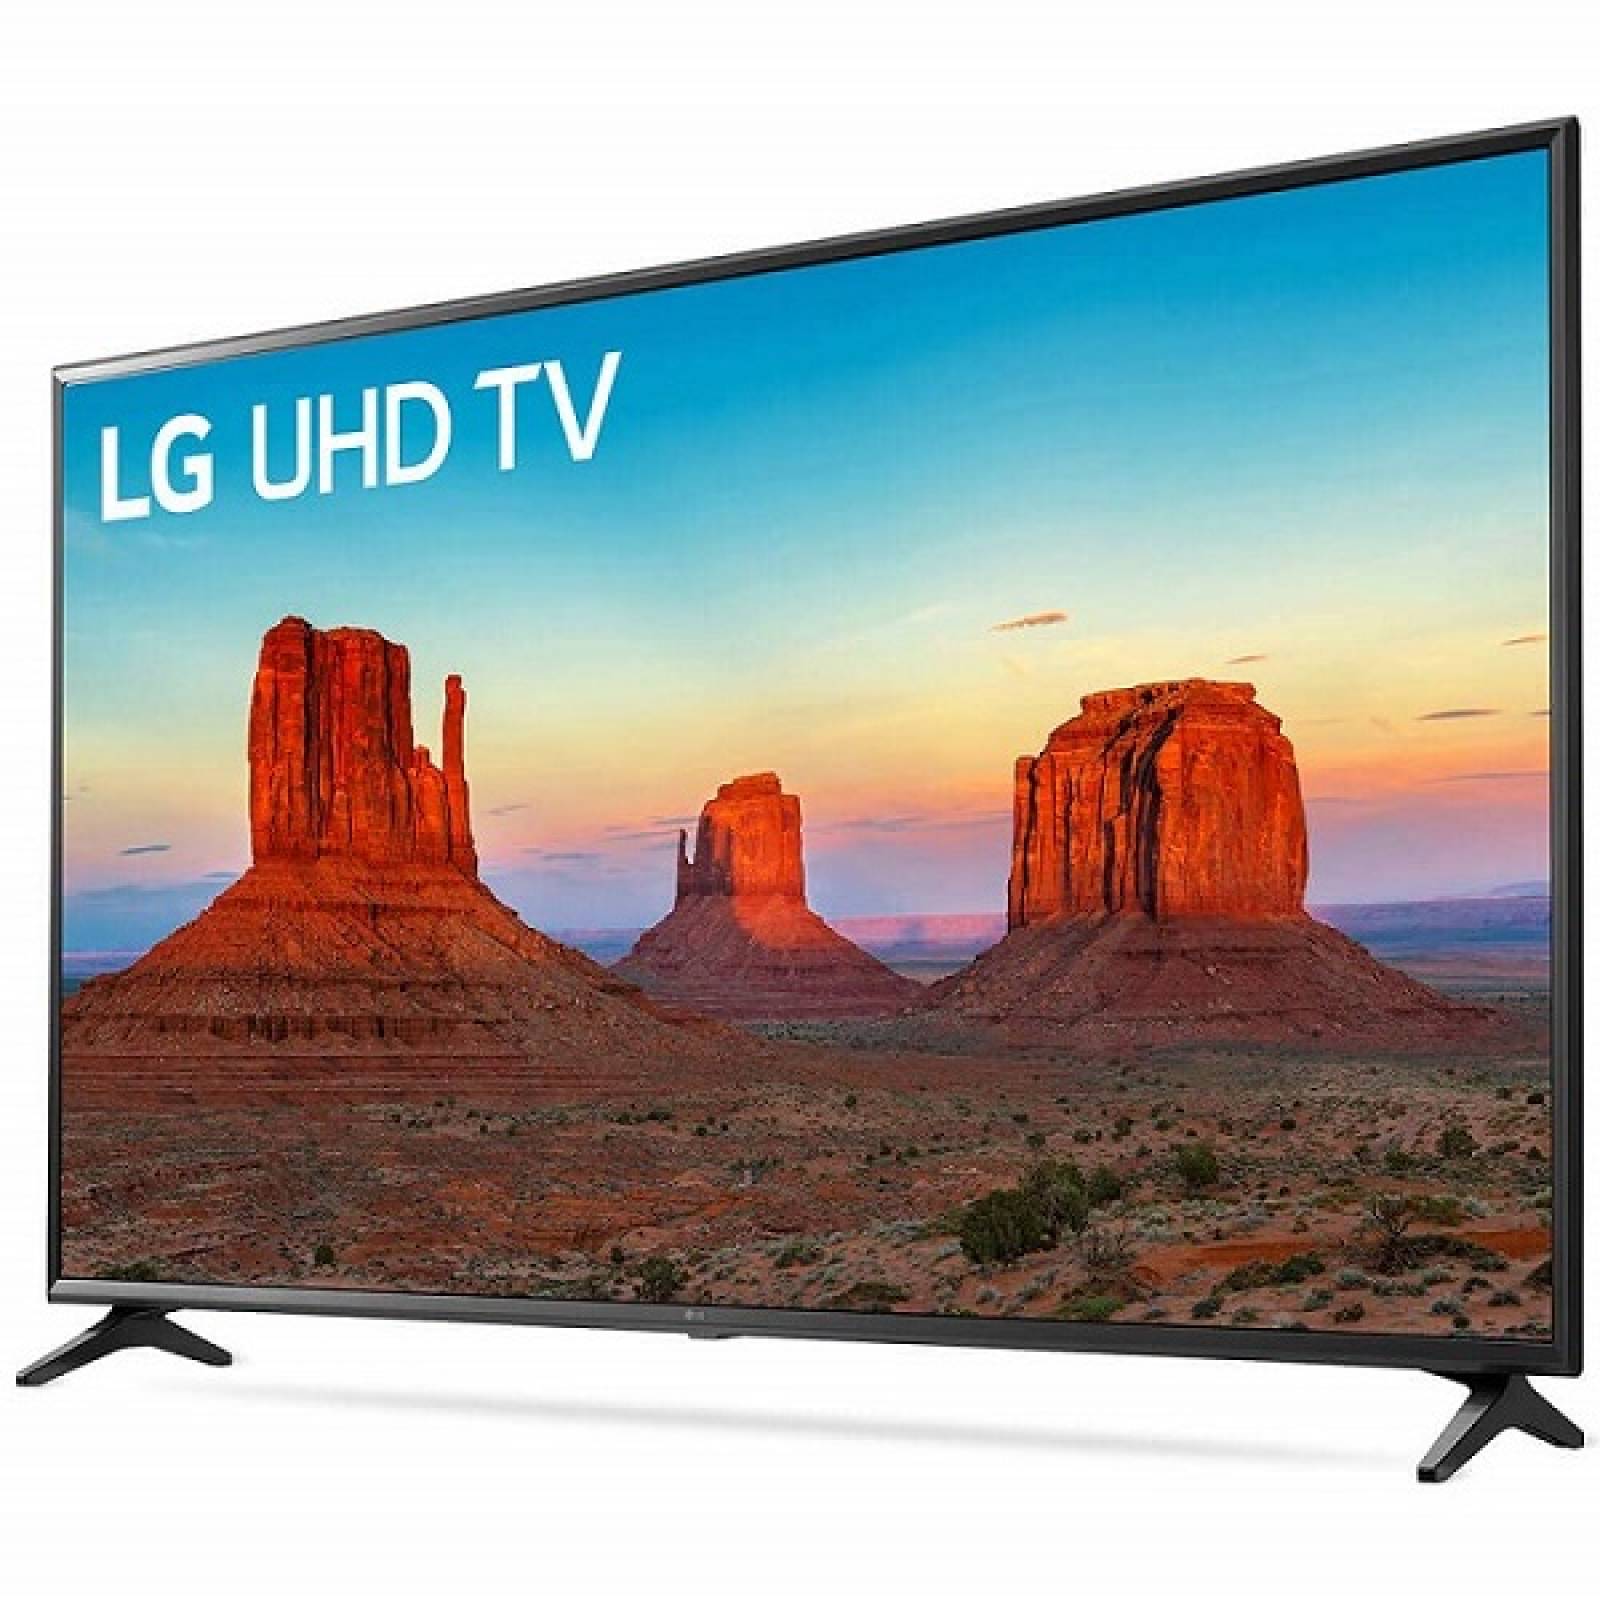 Smart TV LG 49 4K HDR UHD Panel IPS 49UK6090PUA - Reacondicionado